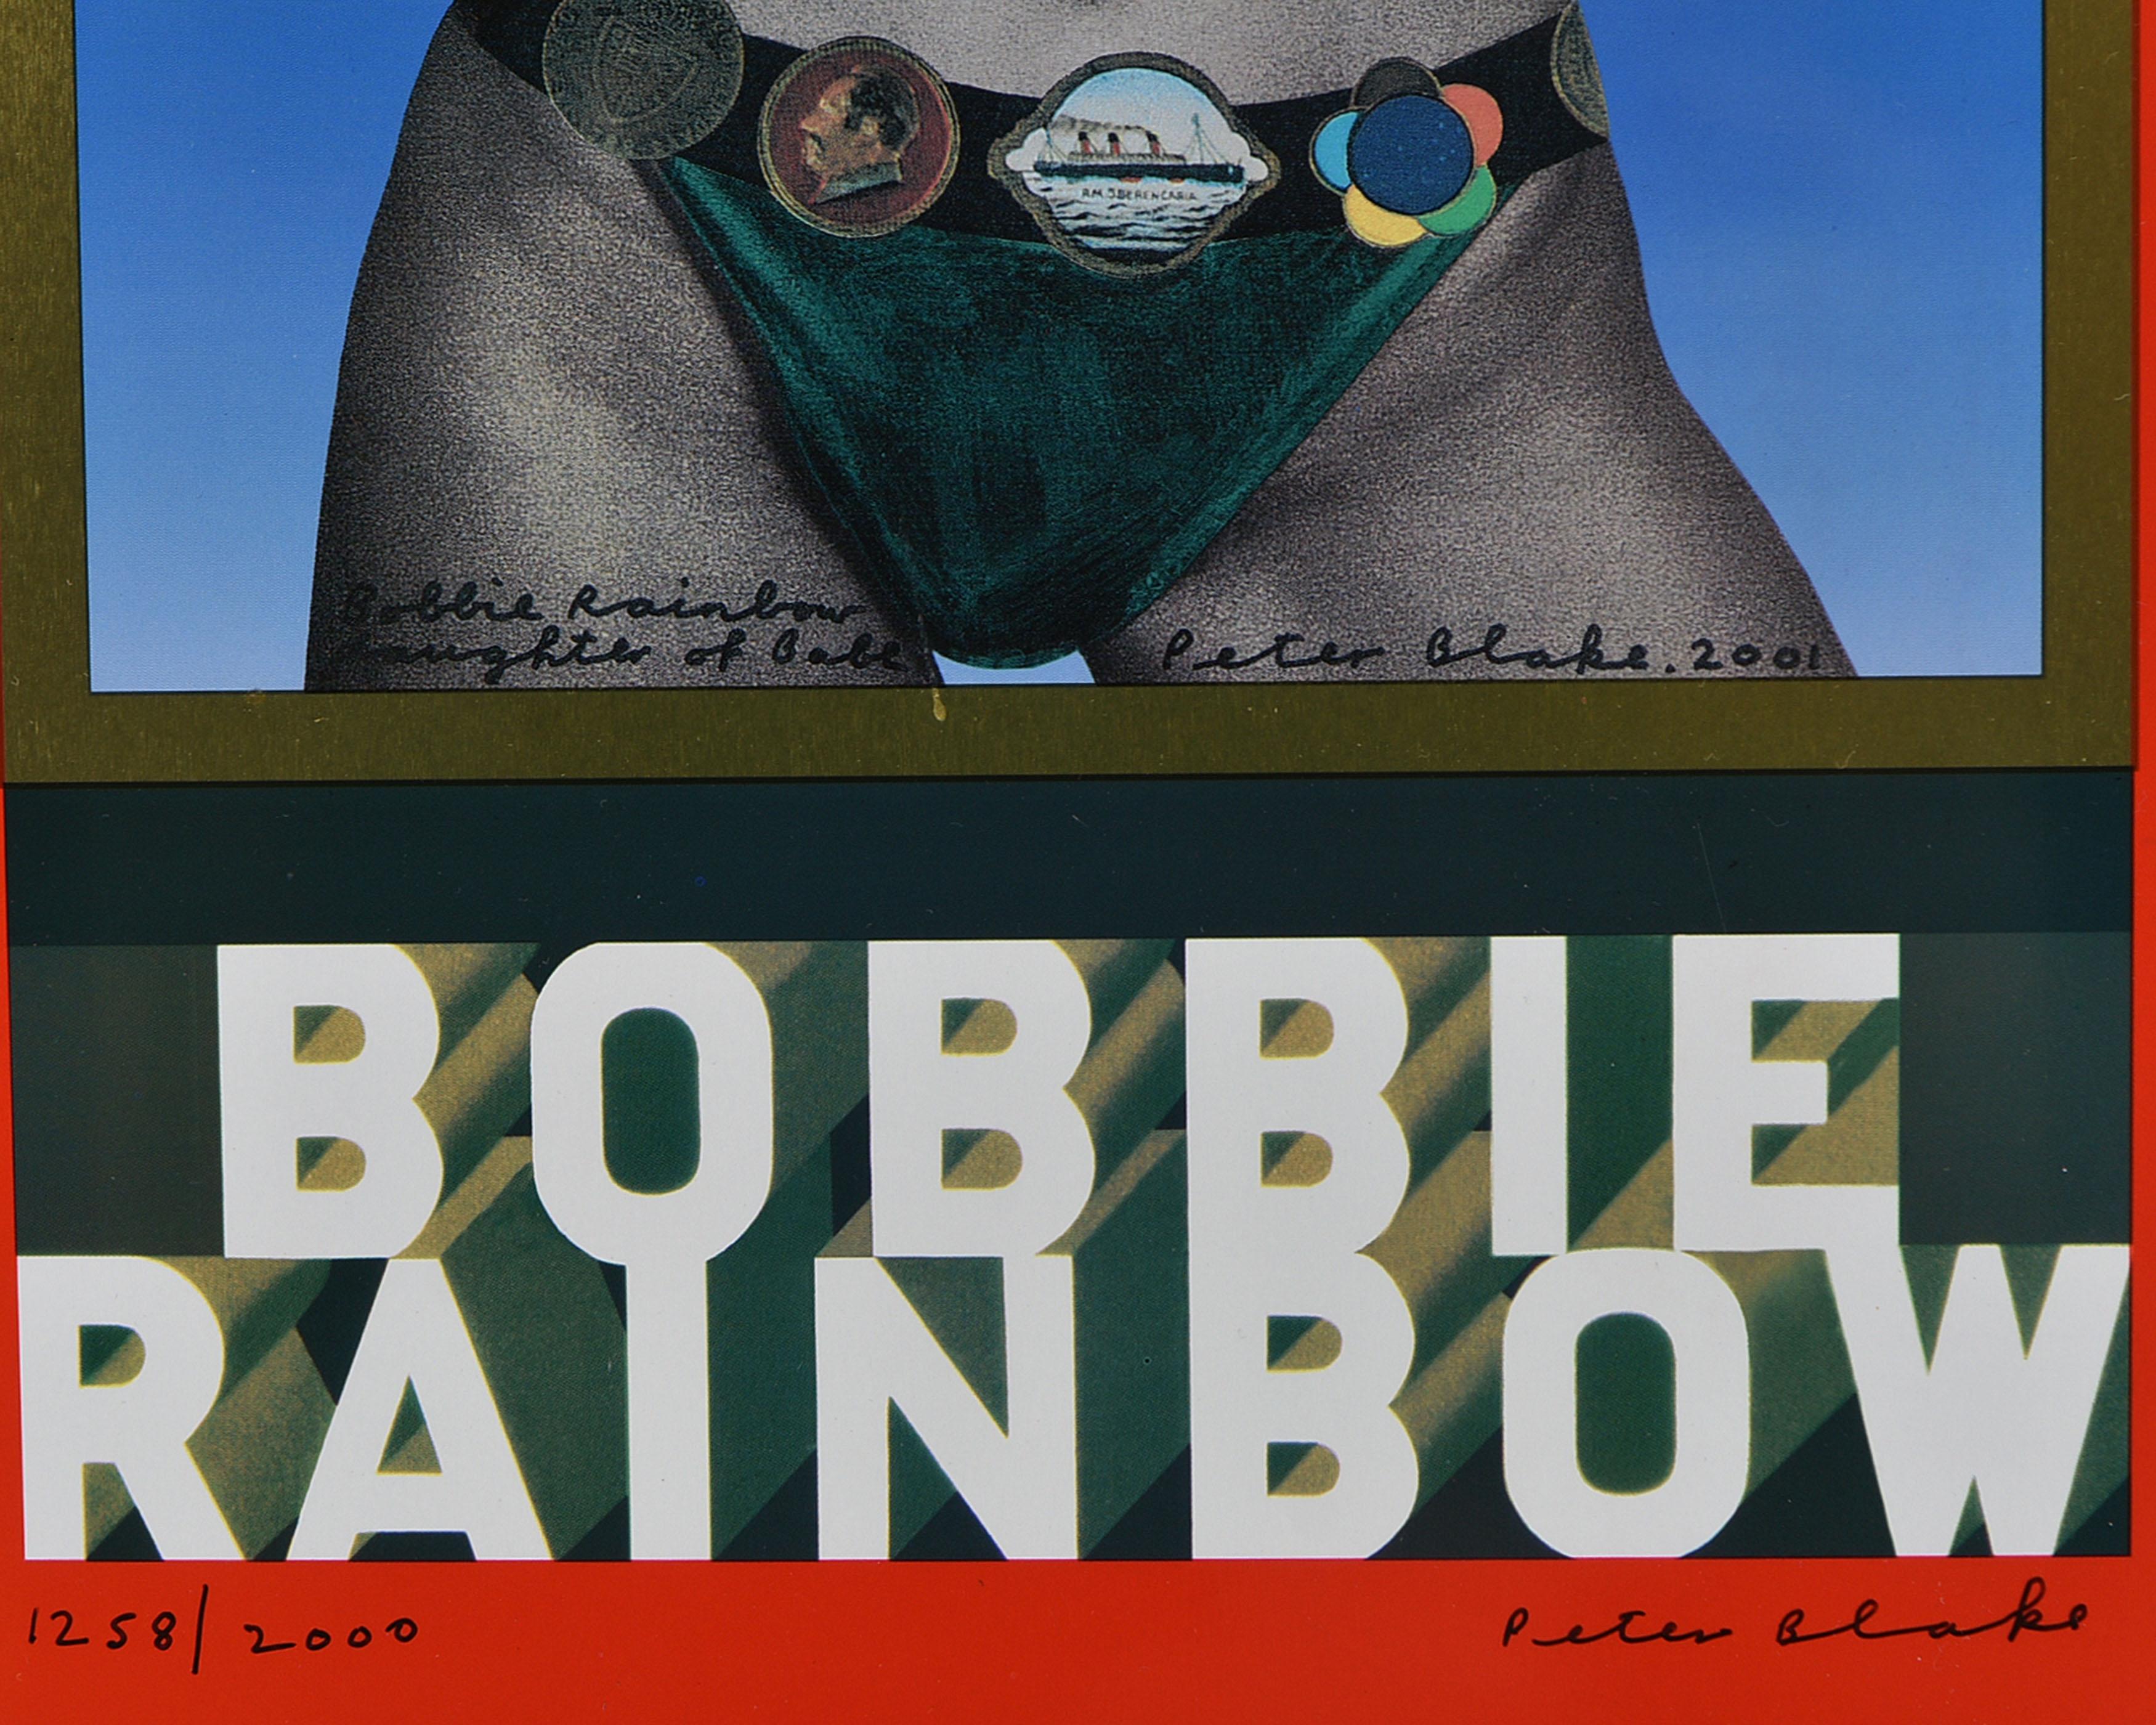 Post-Modern Bobbie Rainbow by Peter Blake Lithoprint on Tin 2001 Signed Pop Art For Sale